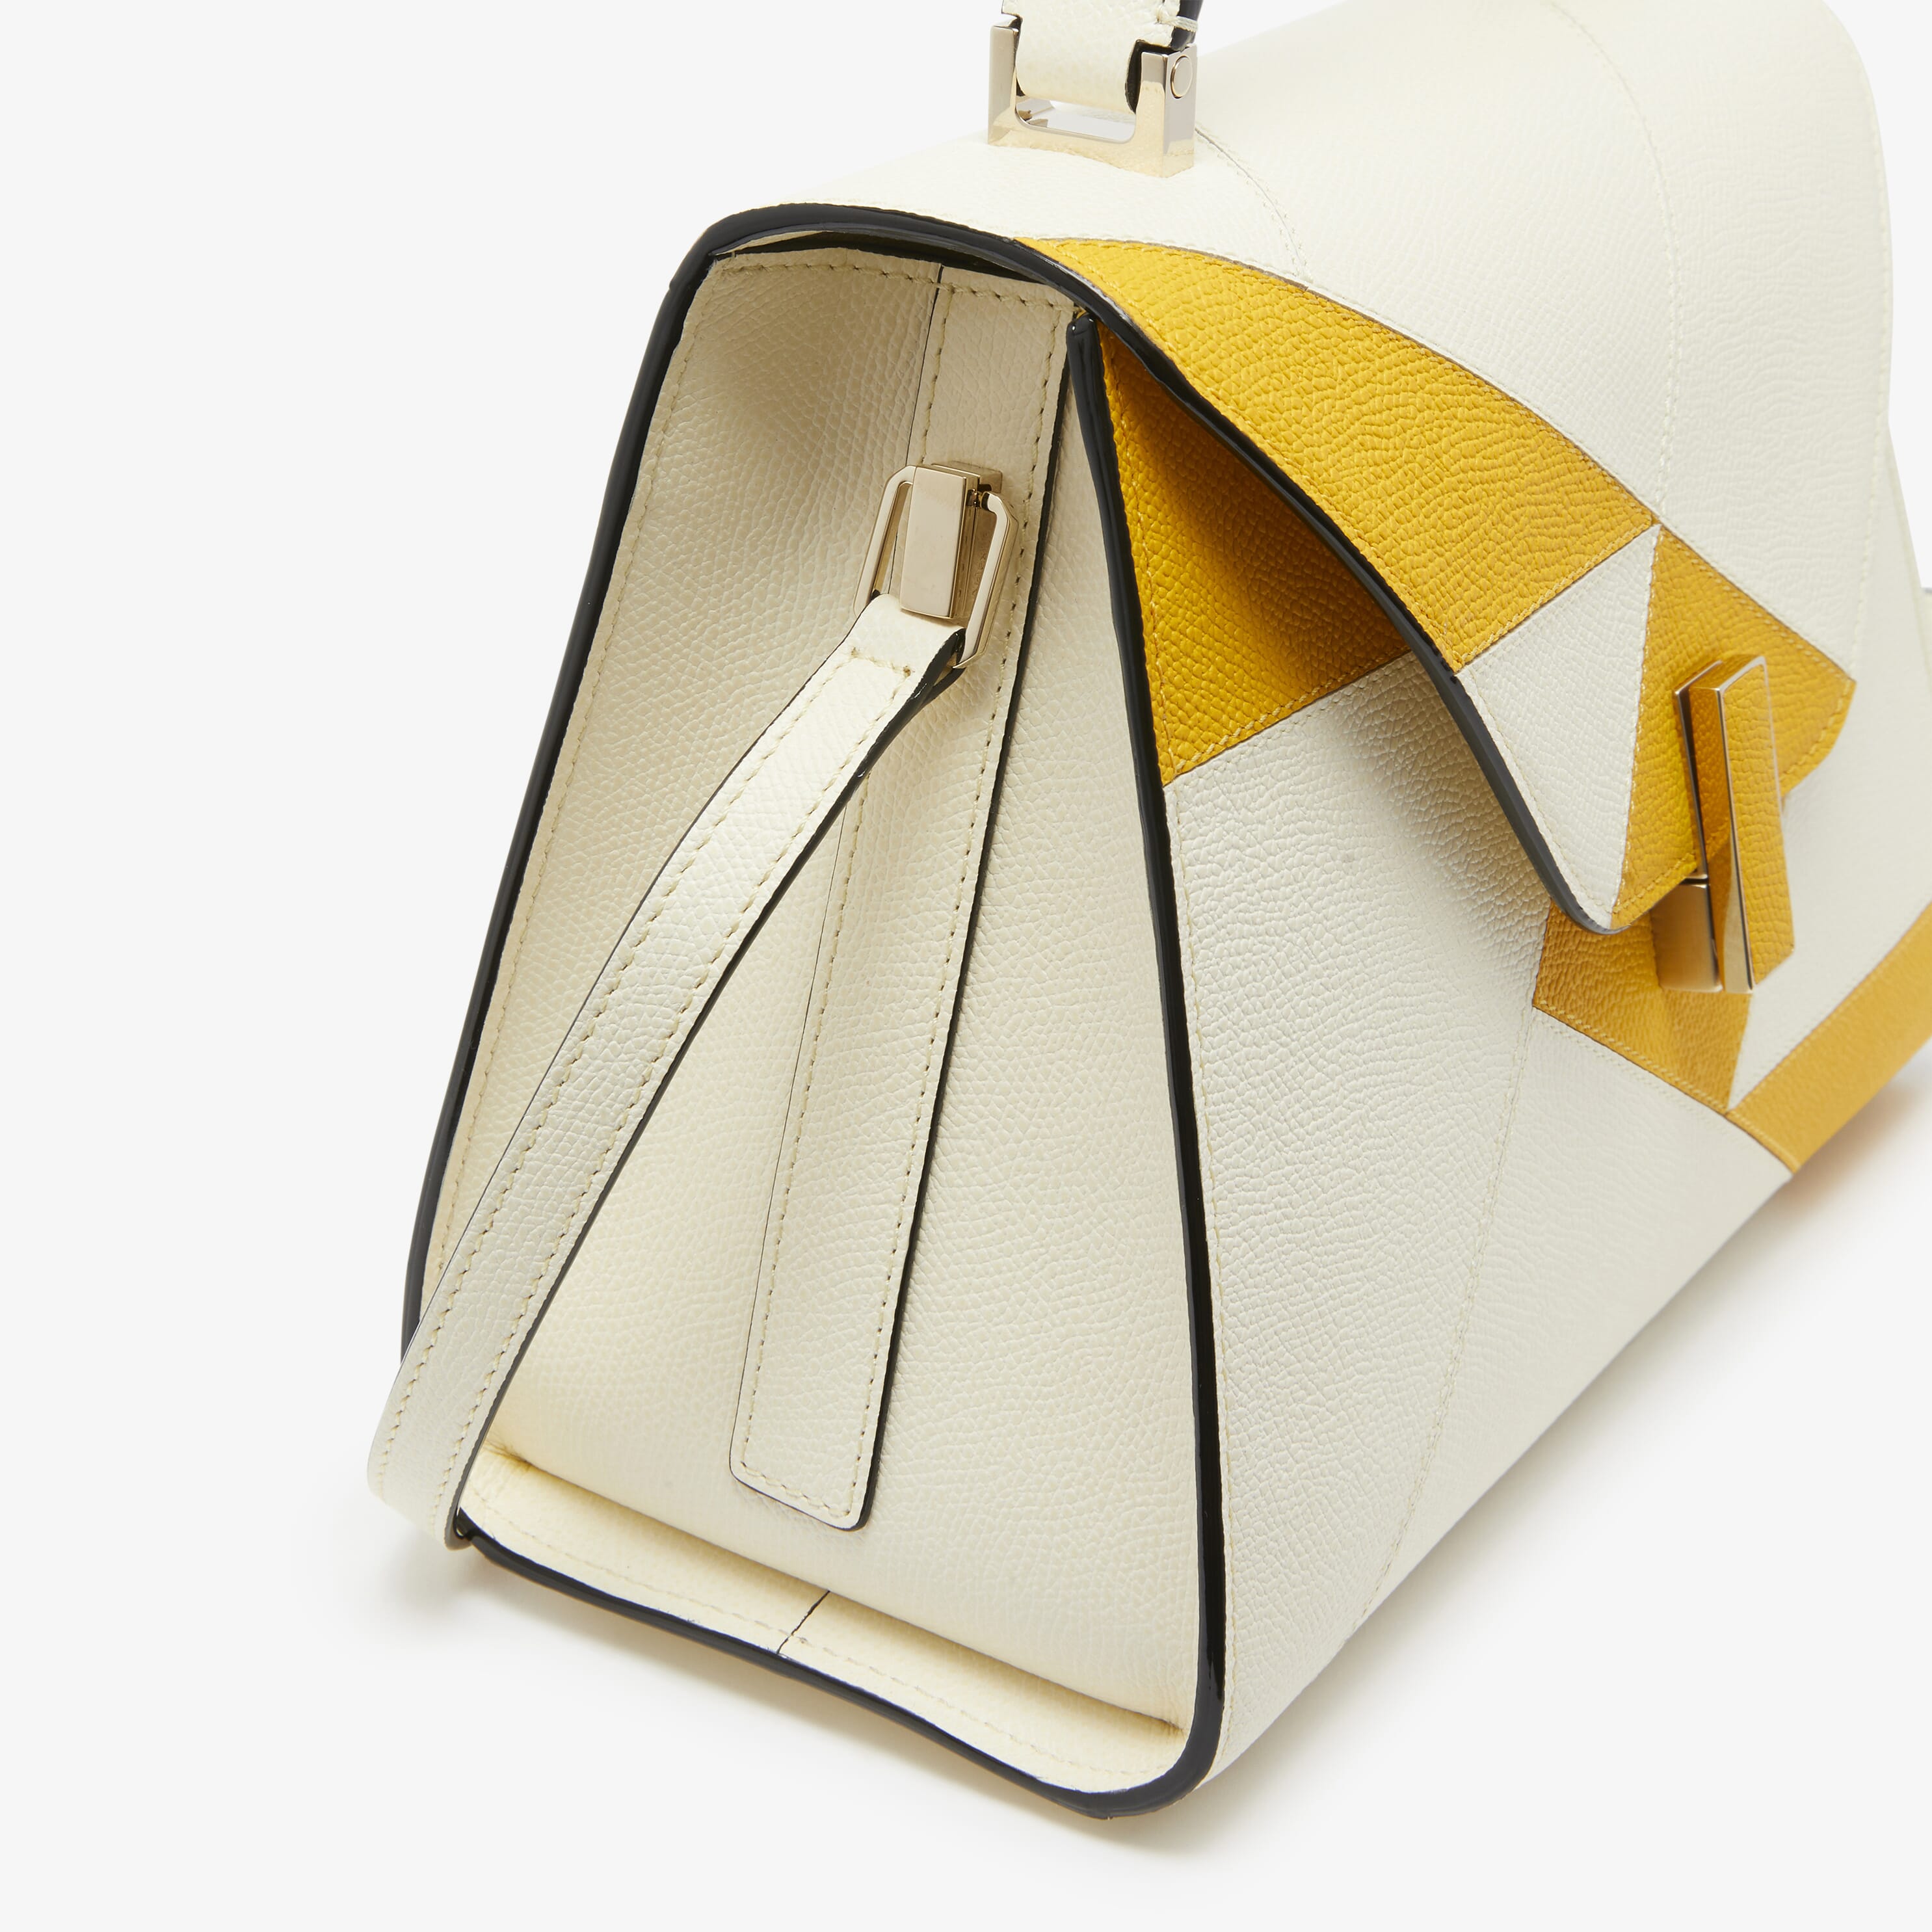 Iside Carousel Top handle Medium bag - Pergamena White/Sun Yellow - Vitello VS-Intarsio Rombo - Valextra - 2